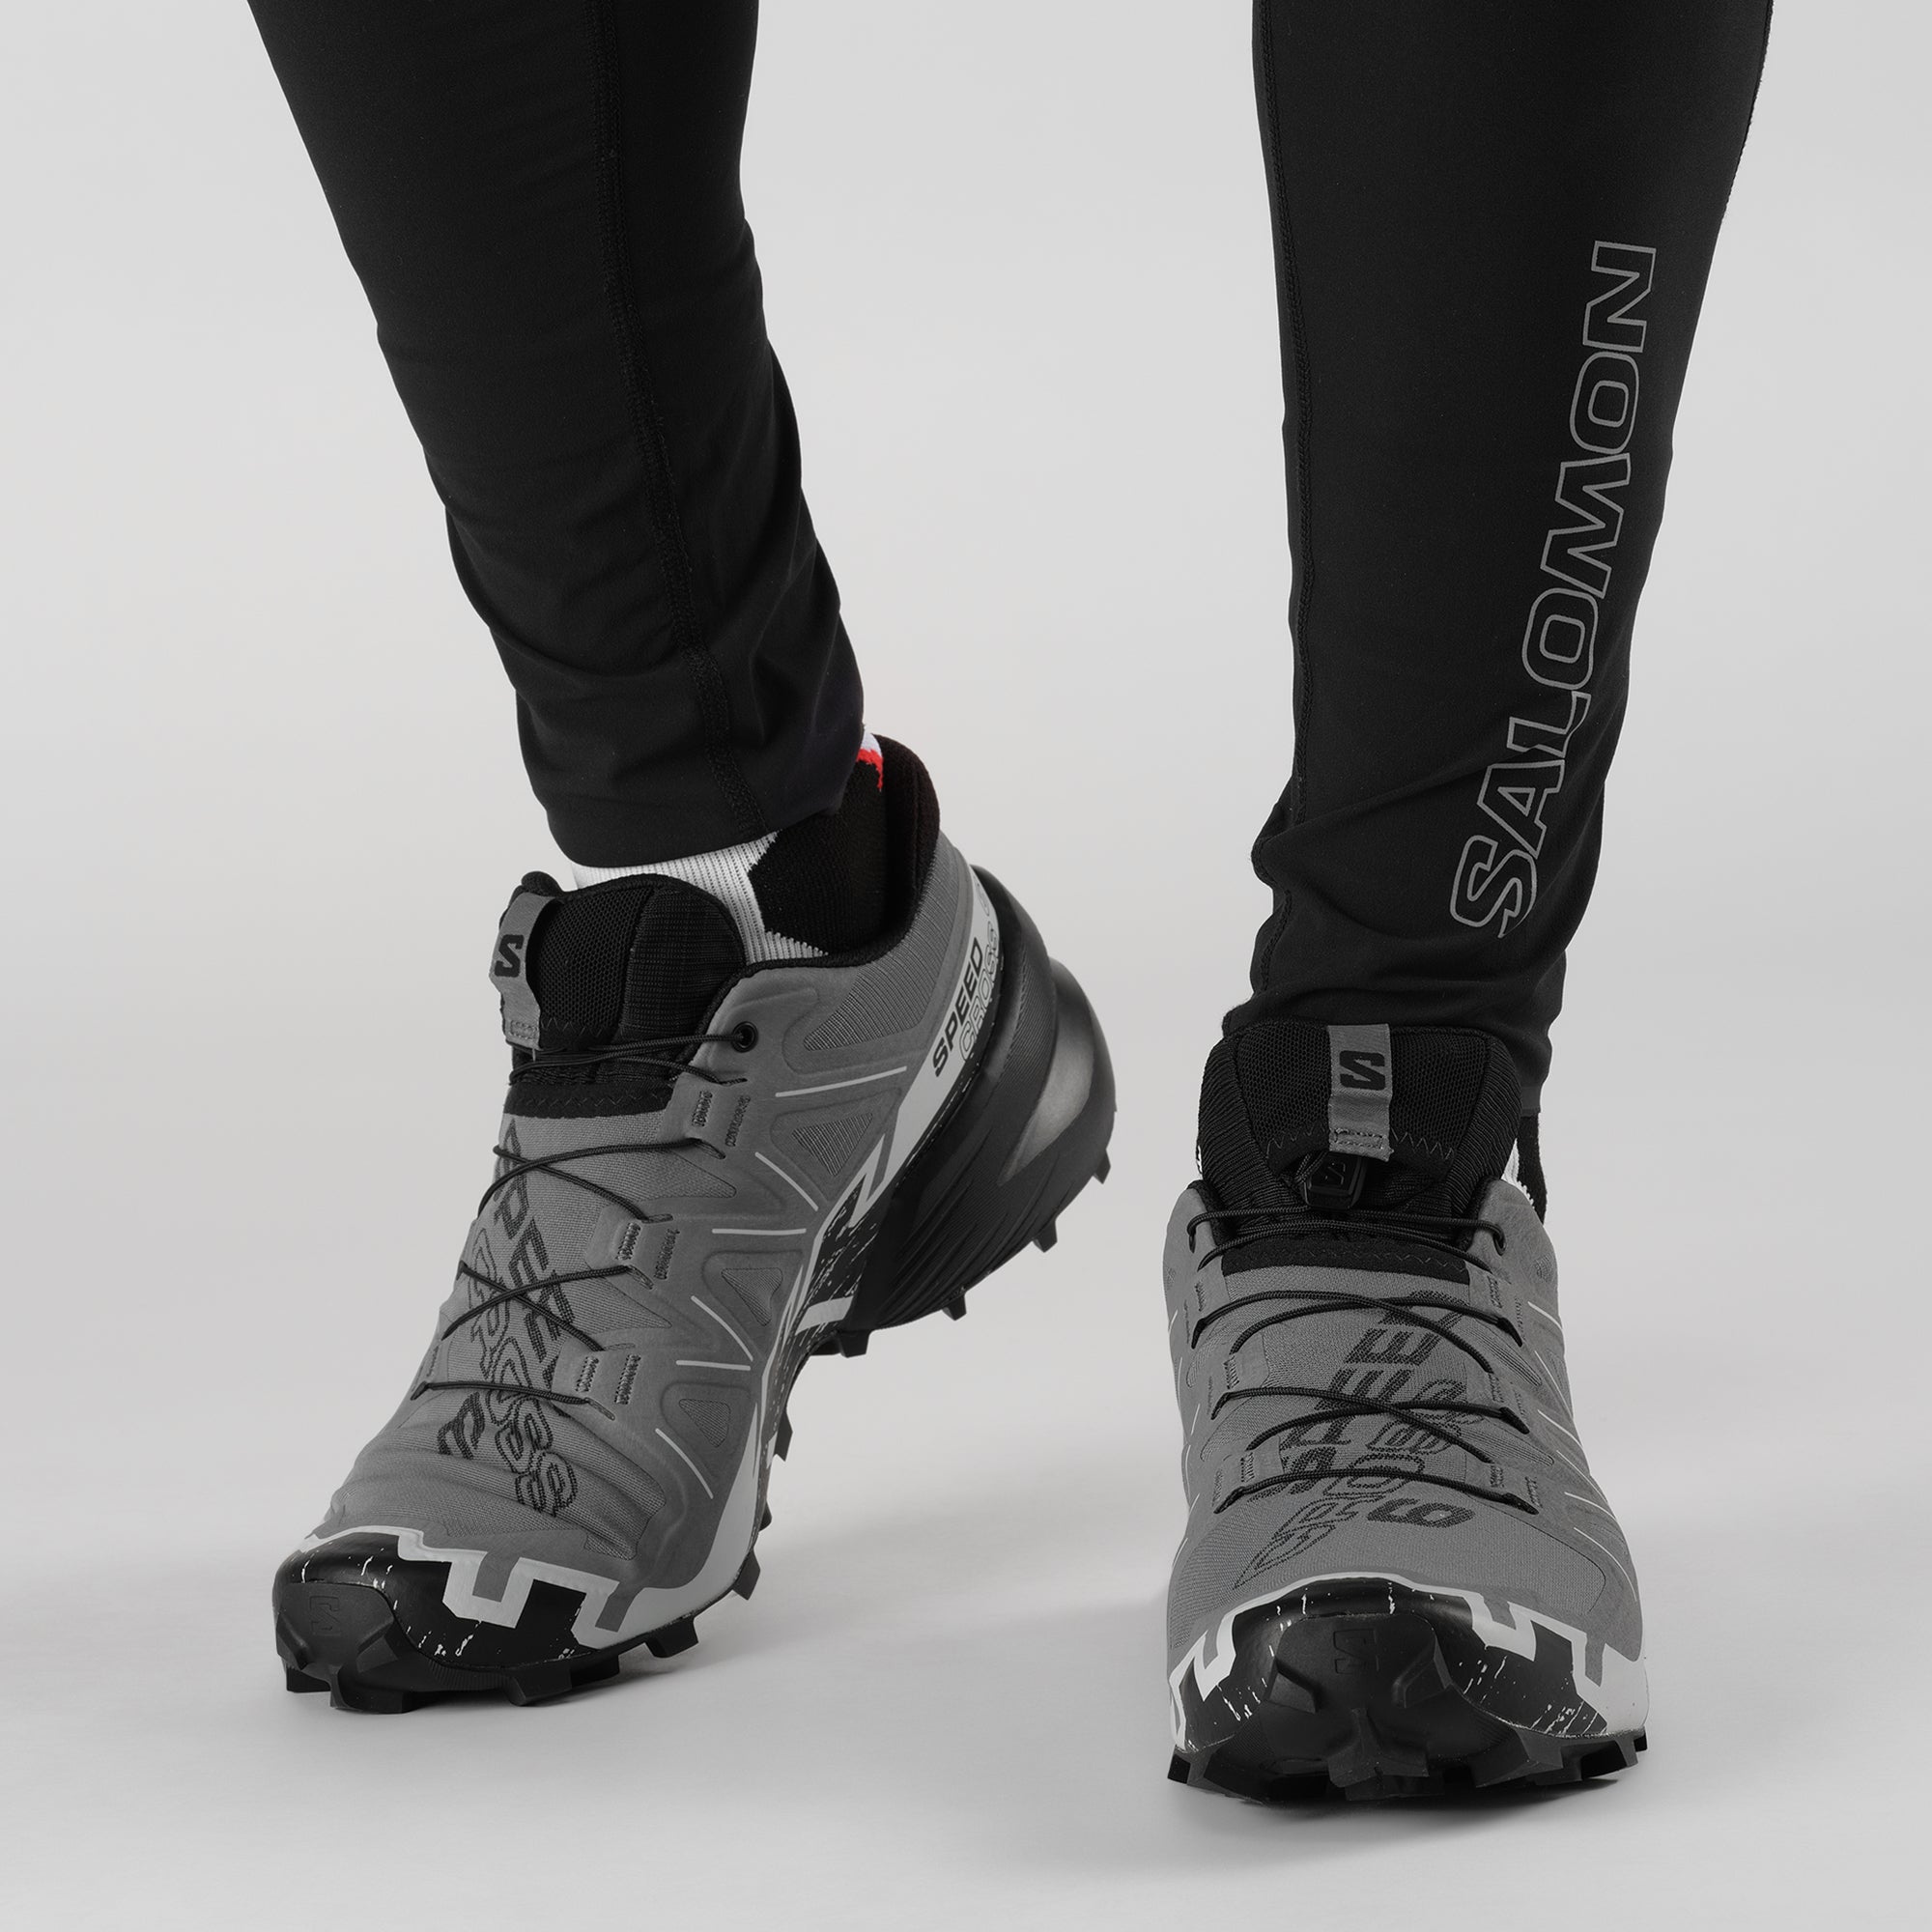 Men's Salomon Speedcross 6 Trail Running Shoes